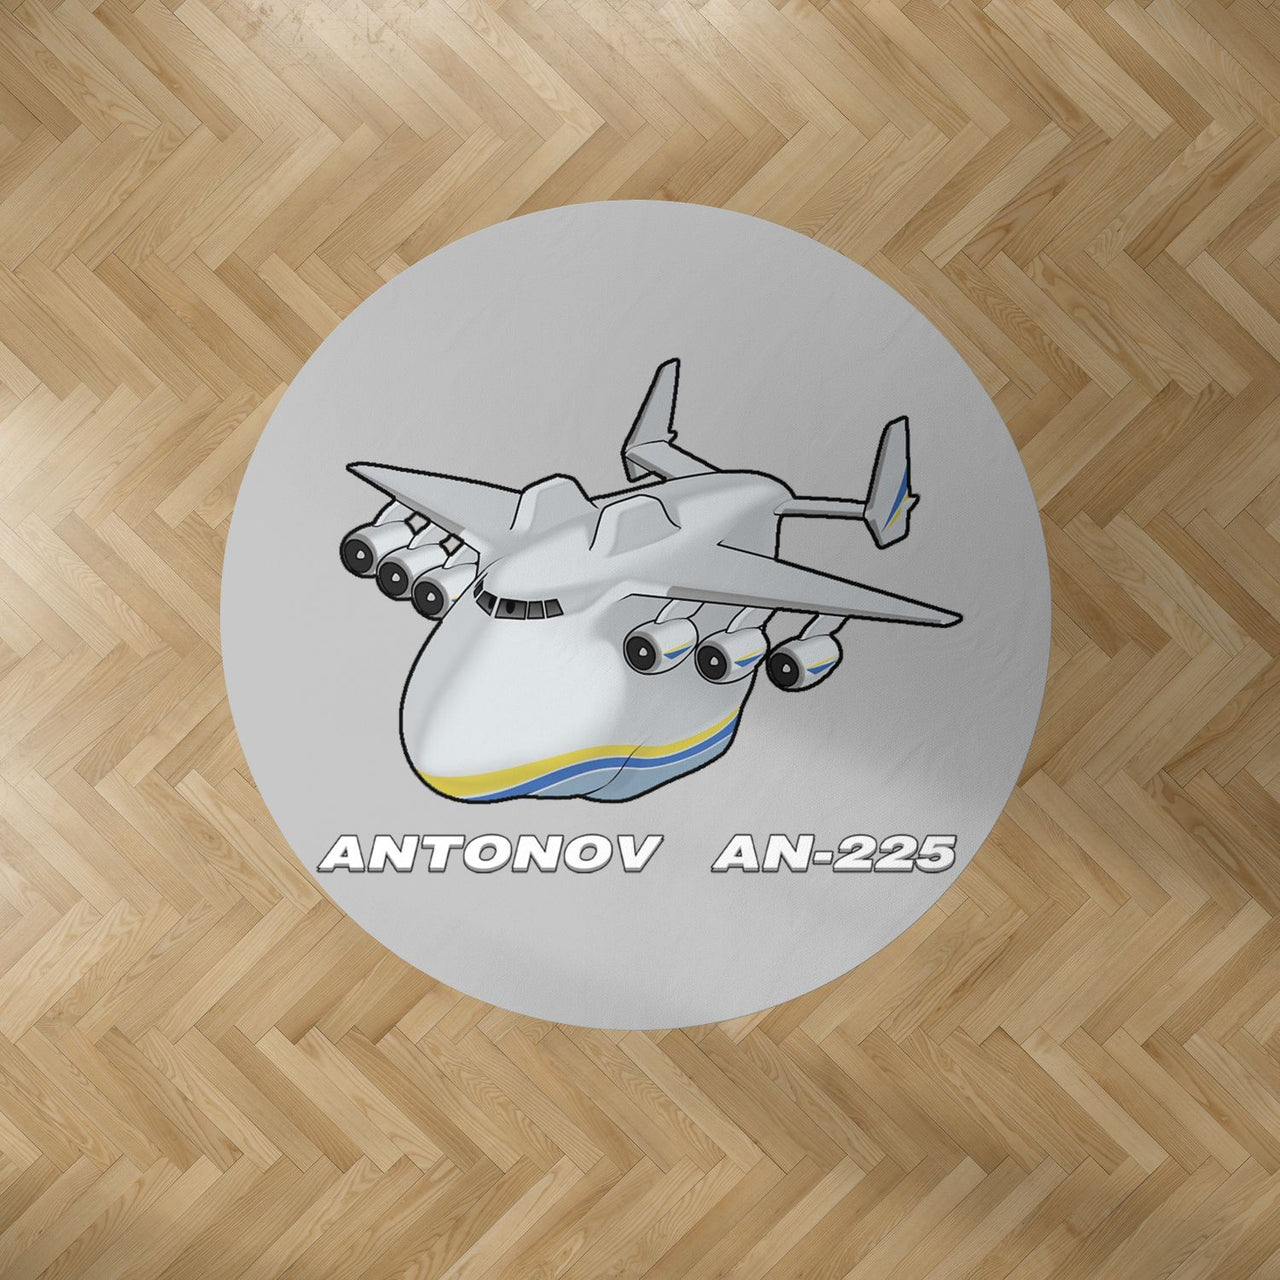 Antonov AN-225 (29) Designed Carpet & Floor Mats (Round)